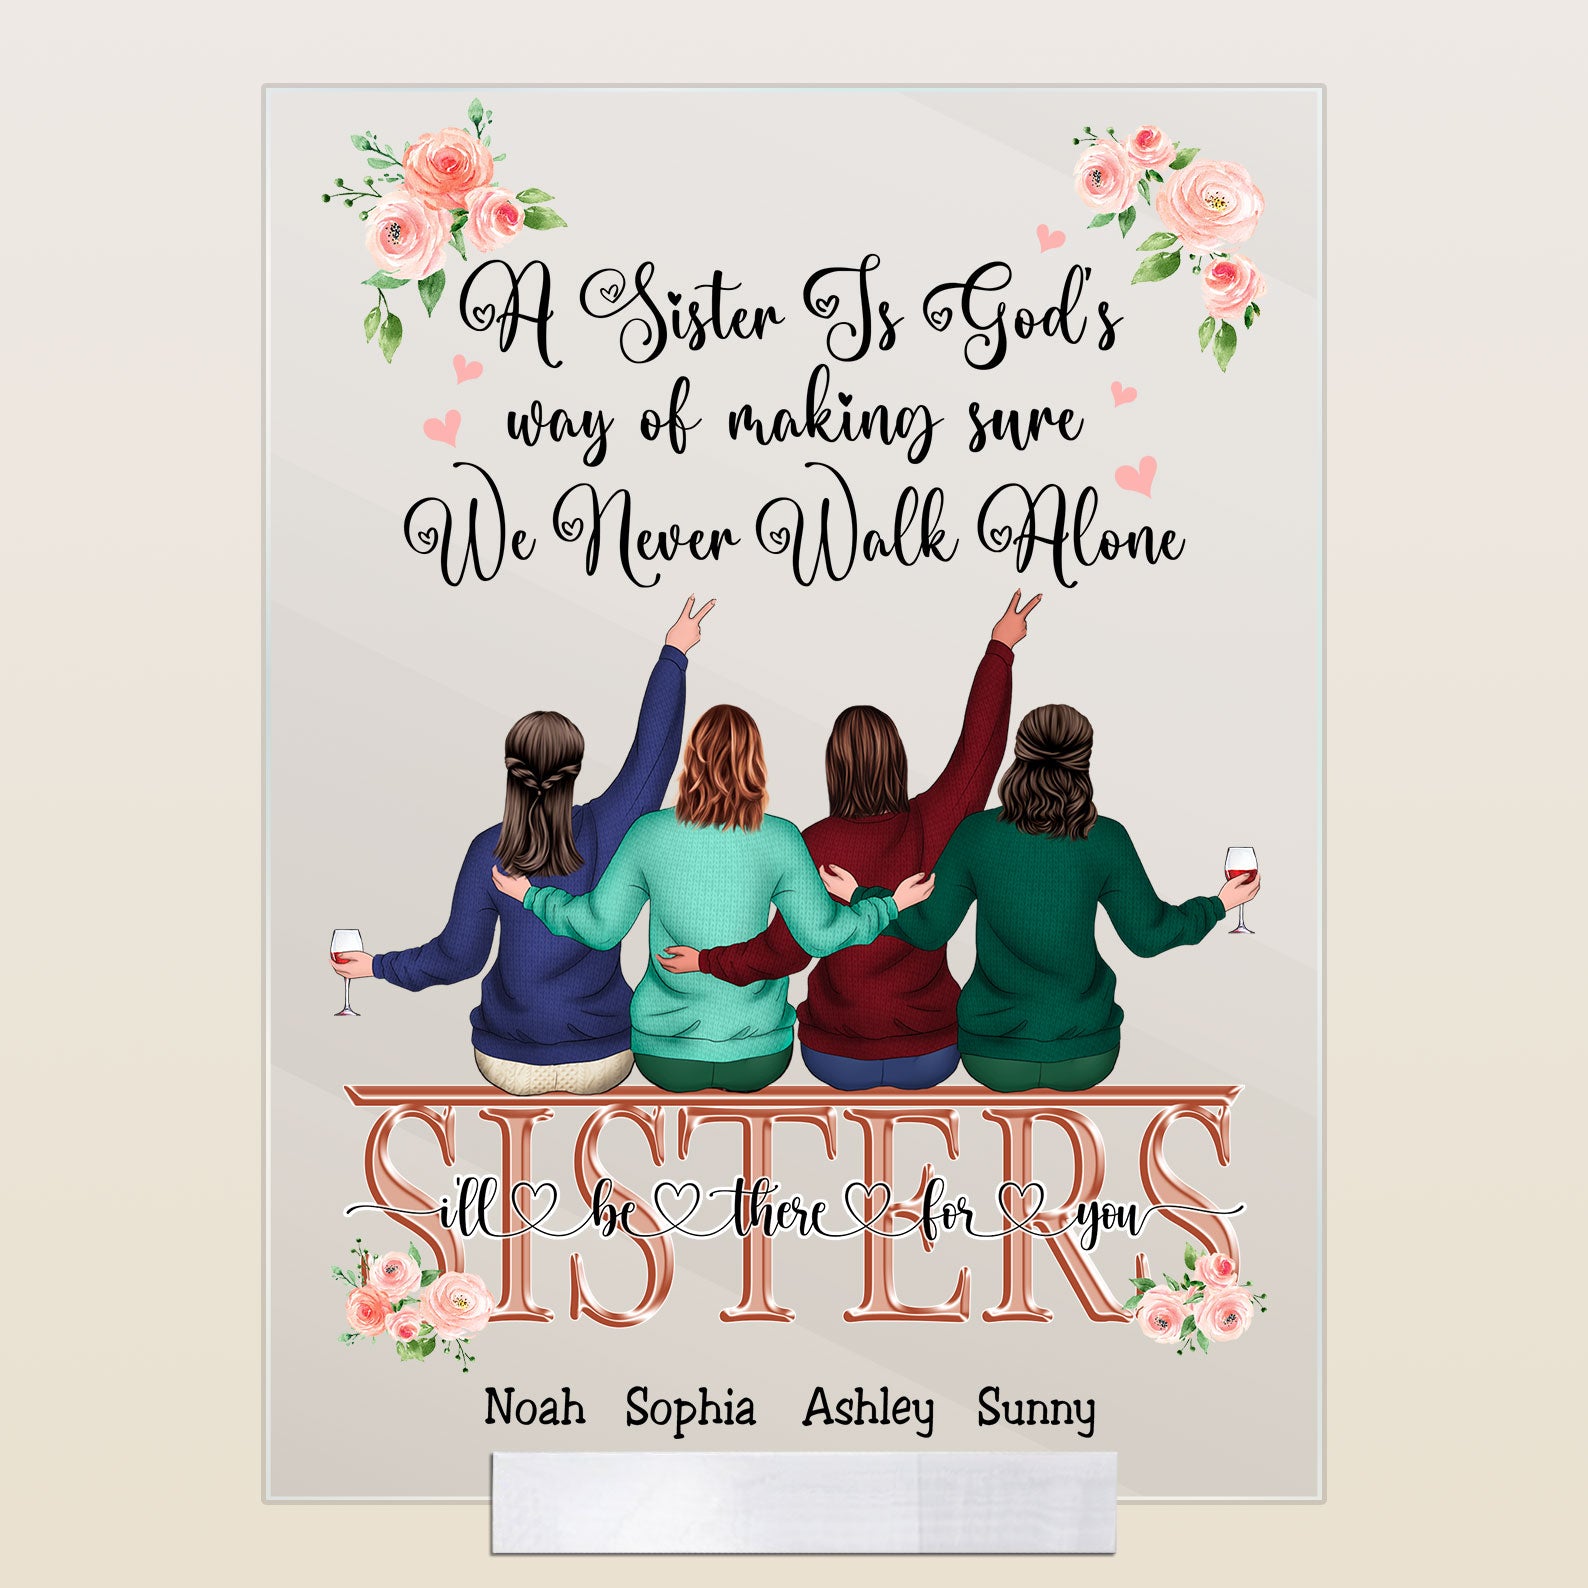 Image of We Never Walk Alone - Personalized Acrylic Plaque - Gift For Sisters  iyl @y eo@ 0 QH% ME@@ e %WGIMMHM i N Noah Sophia Ashley Sunny 1 